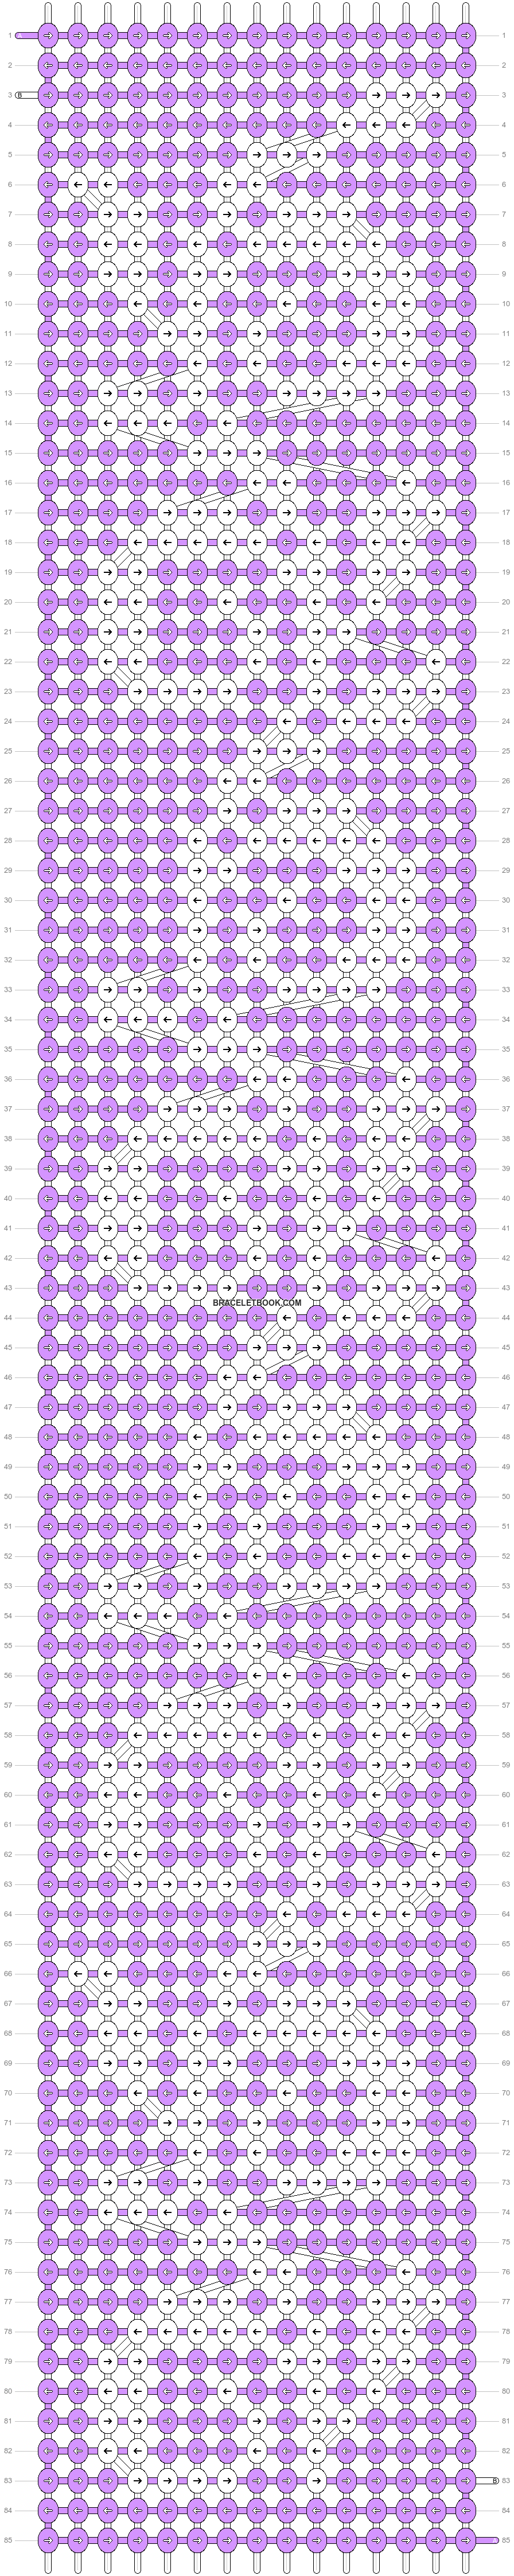 Alpha pattern #42366 variation #78243 pattern